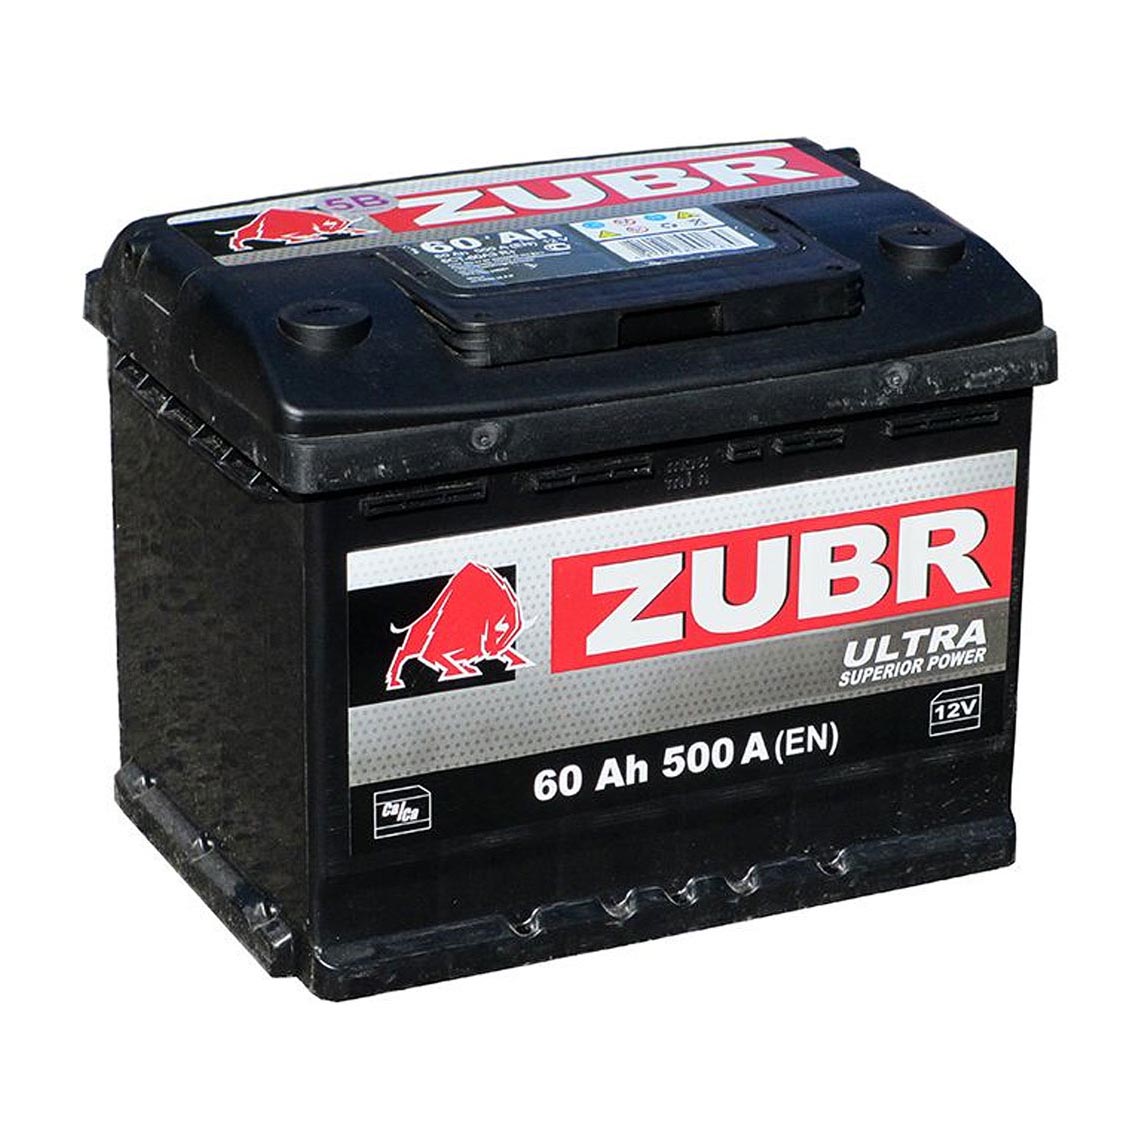 Дешевые аккумуляторы. Zubr Ultra 60ah. Zubr Premium 80 Ач. ЗУБР аккумулятор автомобильный. Zubr zu601 60 а.ч. Zubr Ultra пр. пол., 600 a en (242x175x190).